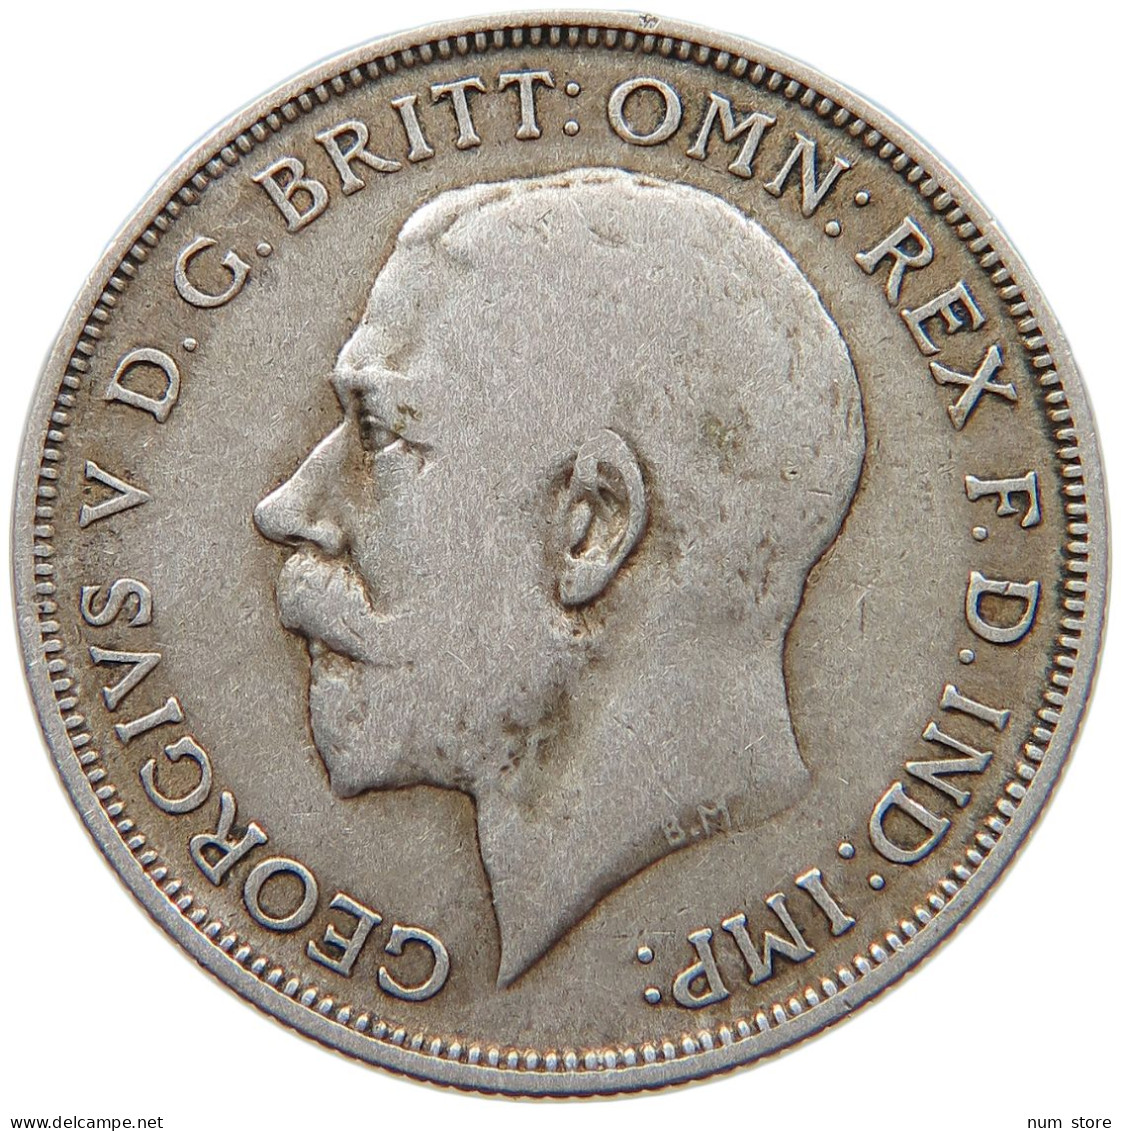 GREAT BRITAIN FLORIN 1920 GEORGE V. (1910-1936) #MA 068169 - J. 1 Florin / 2 Shillings